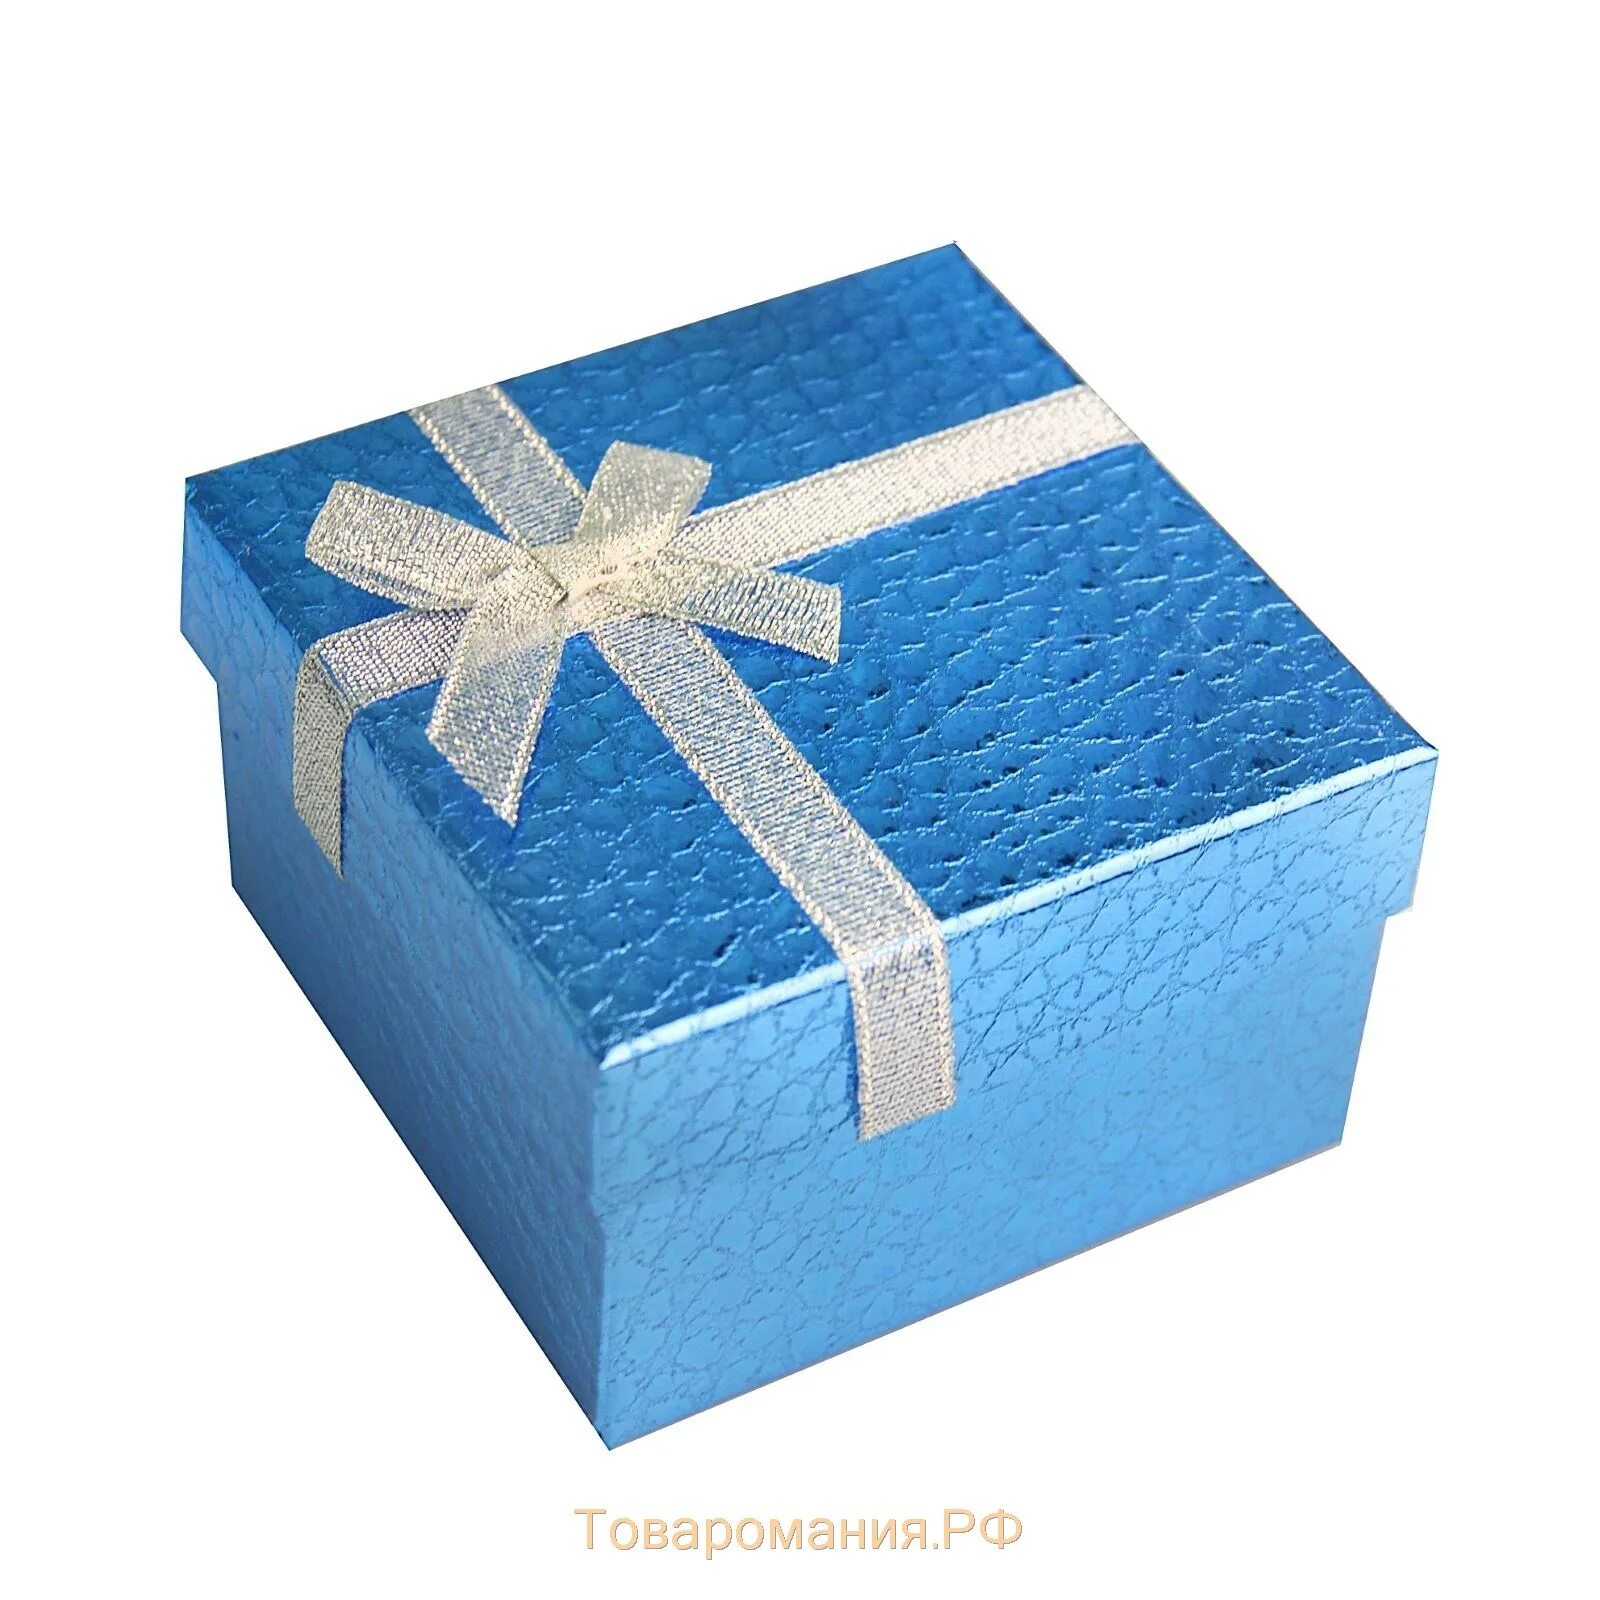 Подарочная коробочка. Подарочная коробка голубого цвета. Подарок синяя коробка. Коробочка голубой подарок. Подарок синий цвет